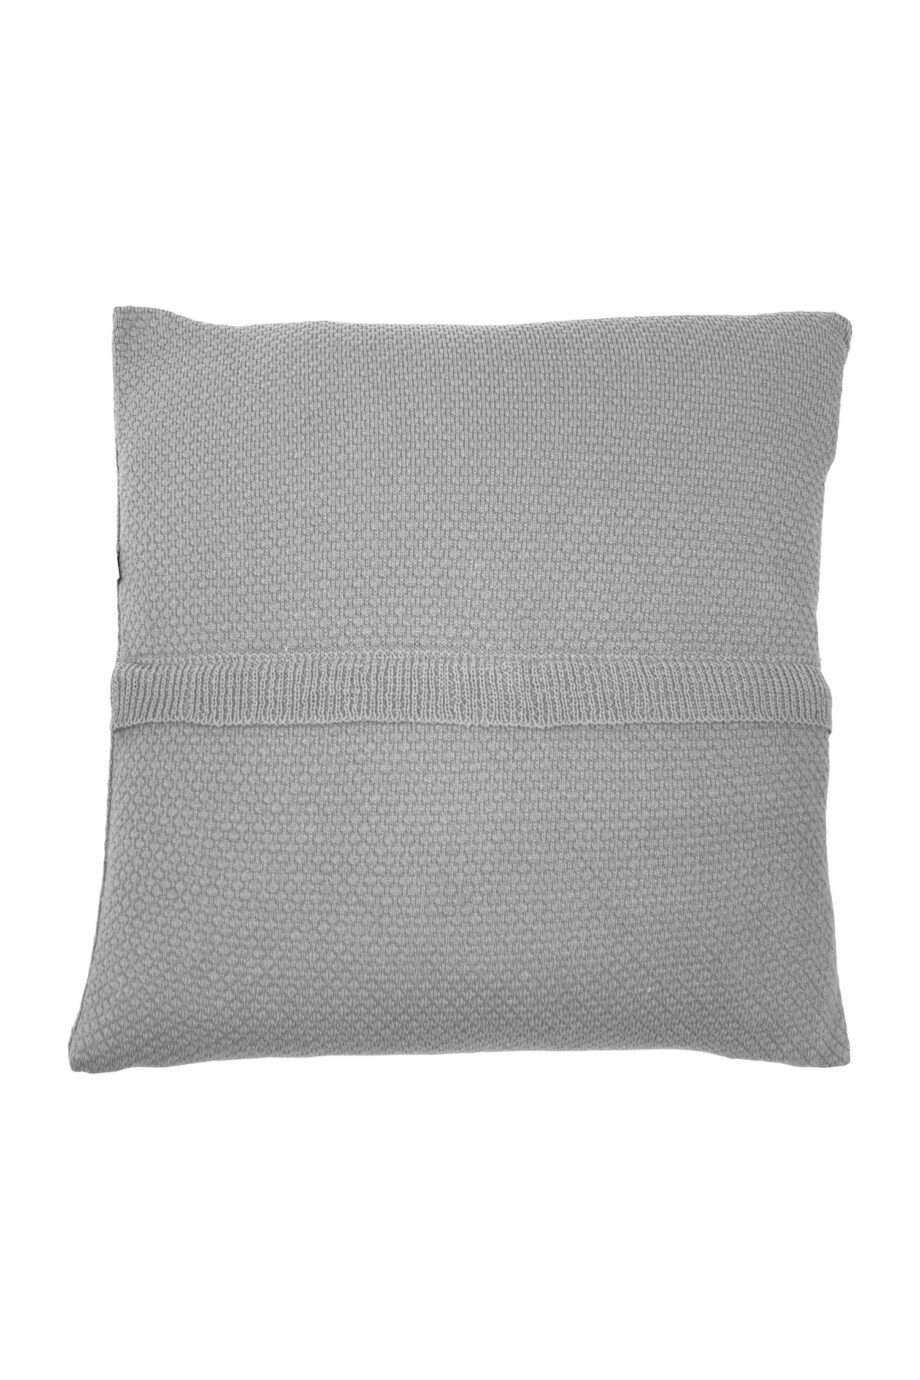 liz light grey knitted cotton pillowcase medium